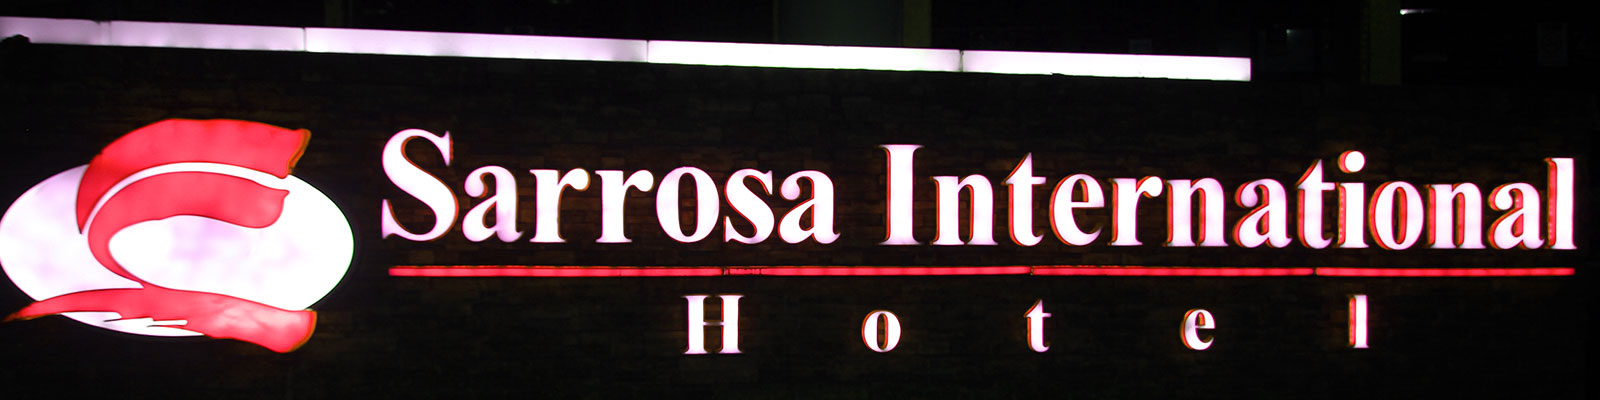 sarrosa international hotel signage